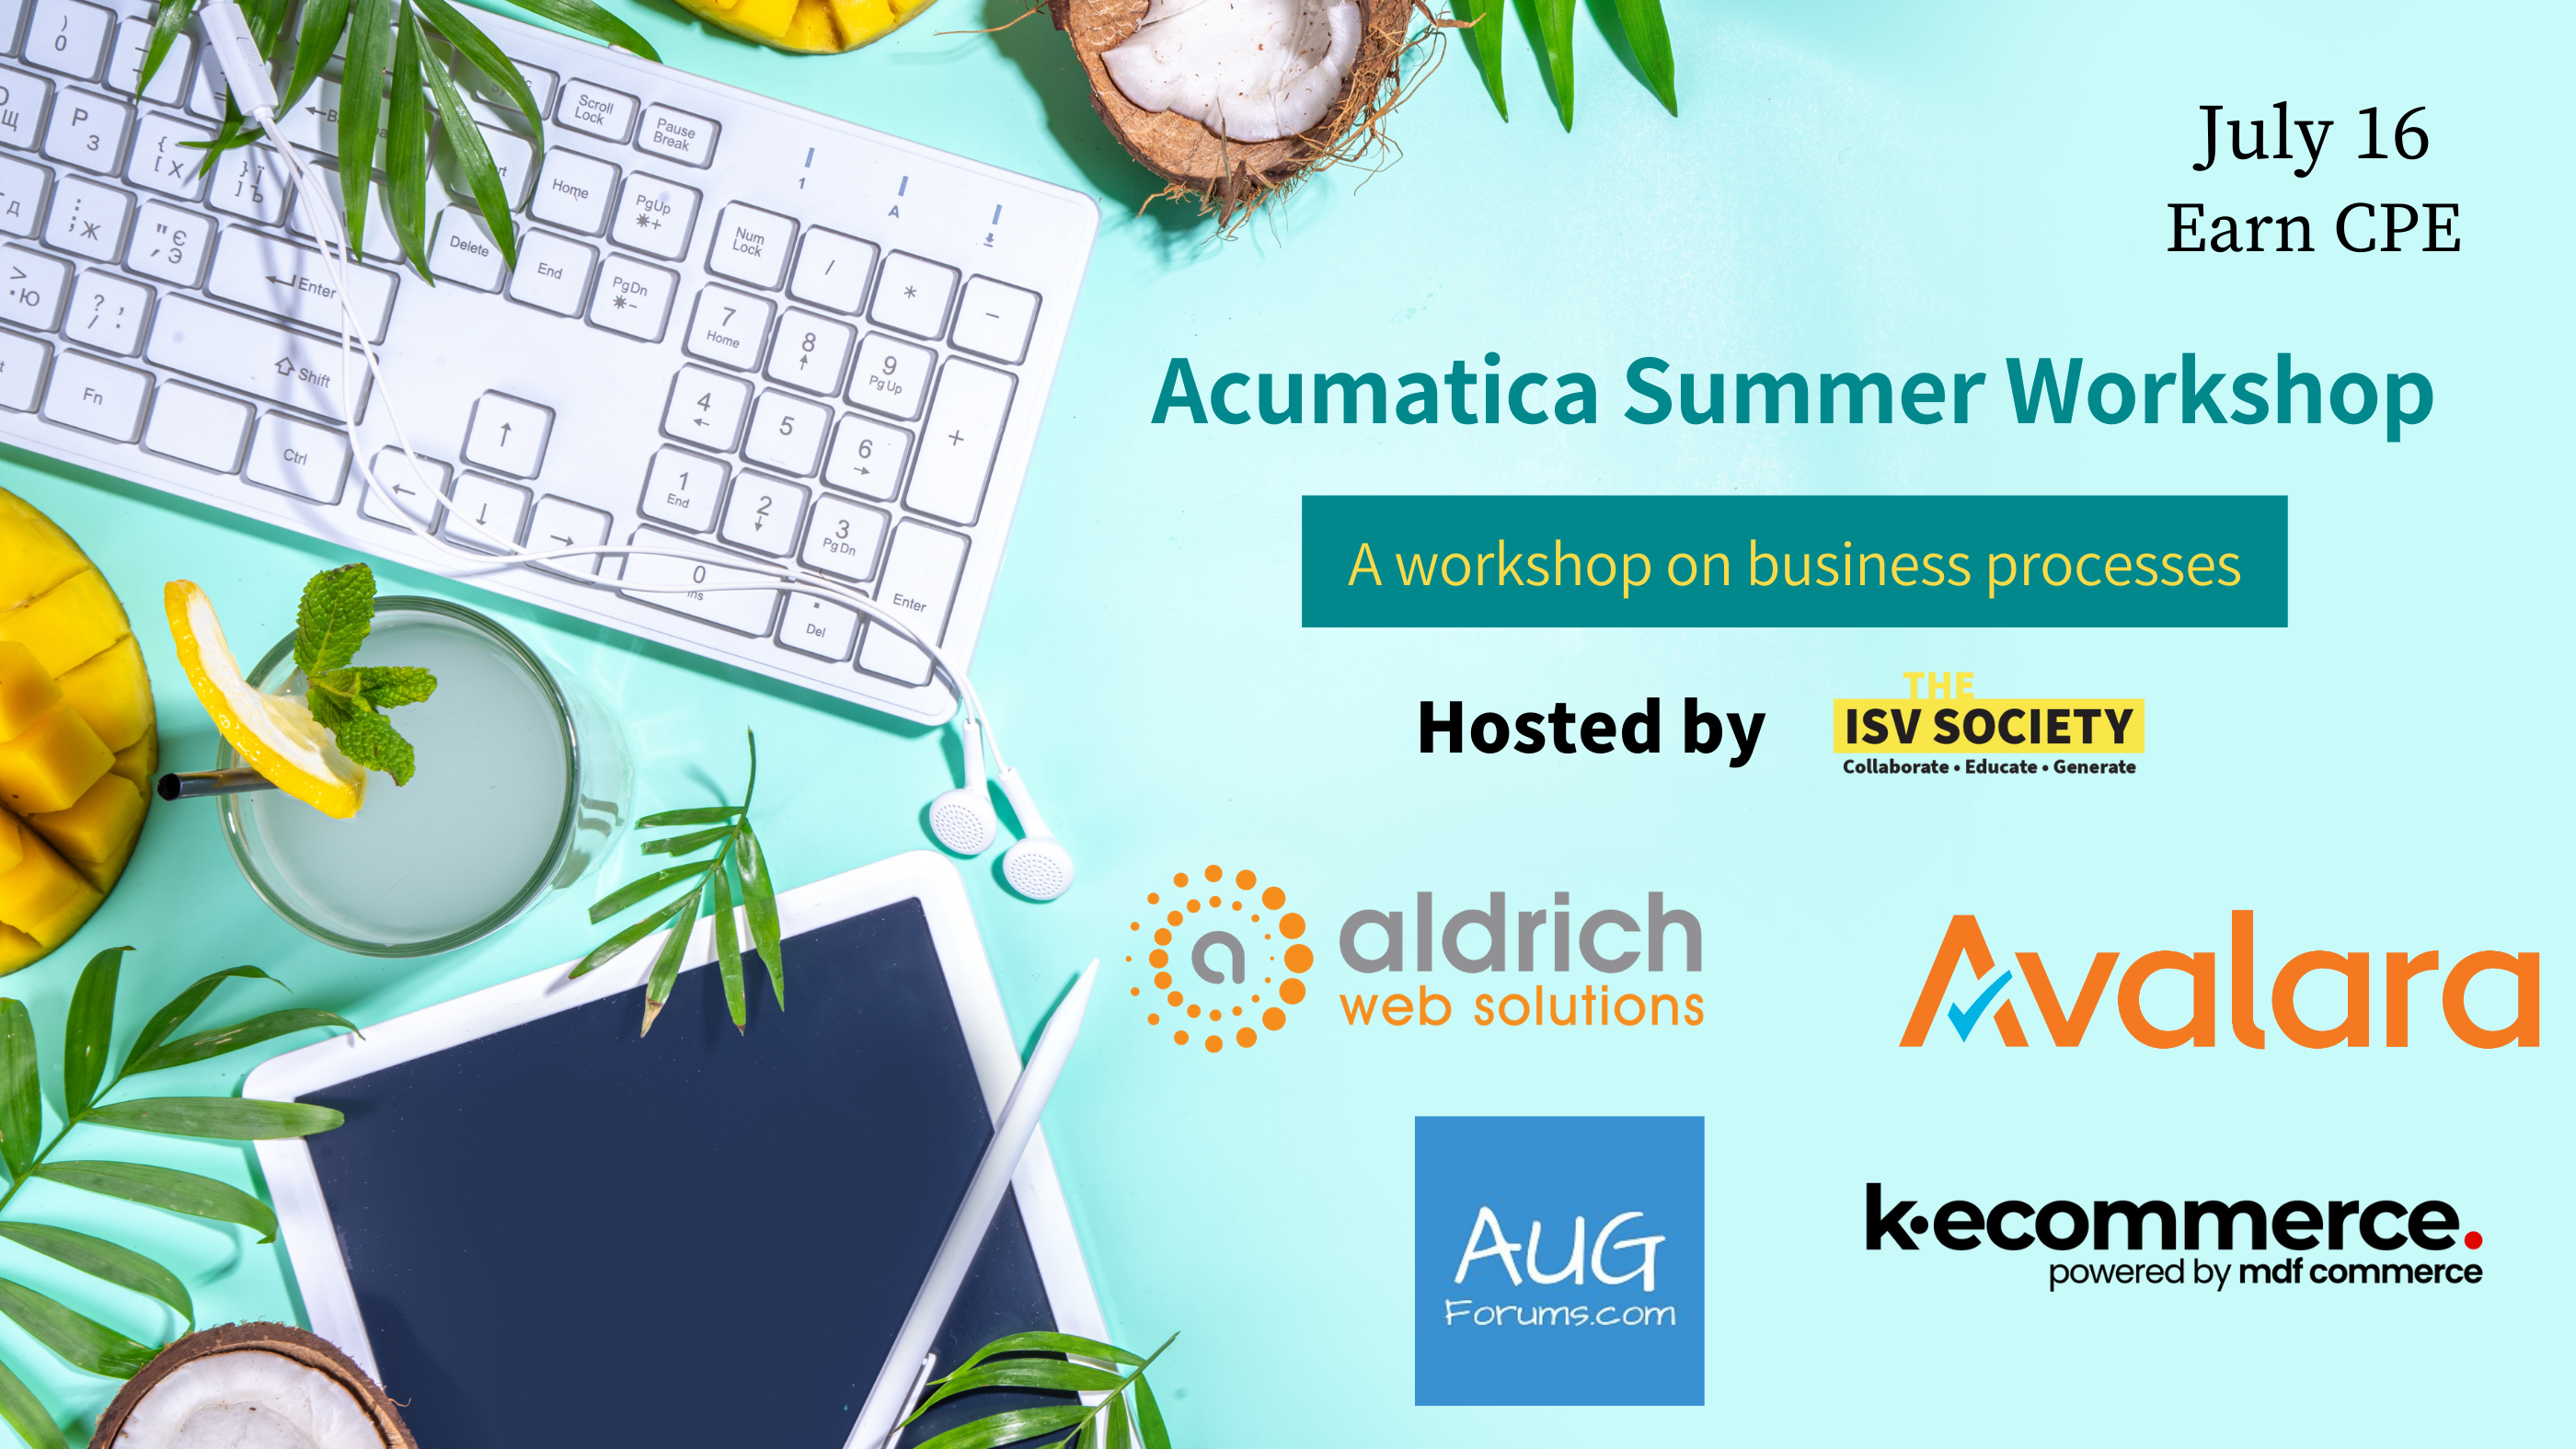 Beat the Summer Heat & Level Up Your Acumatica Skills!